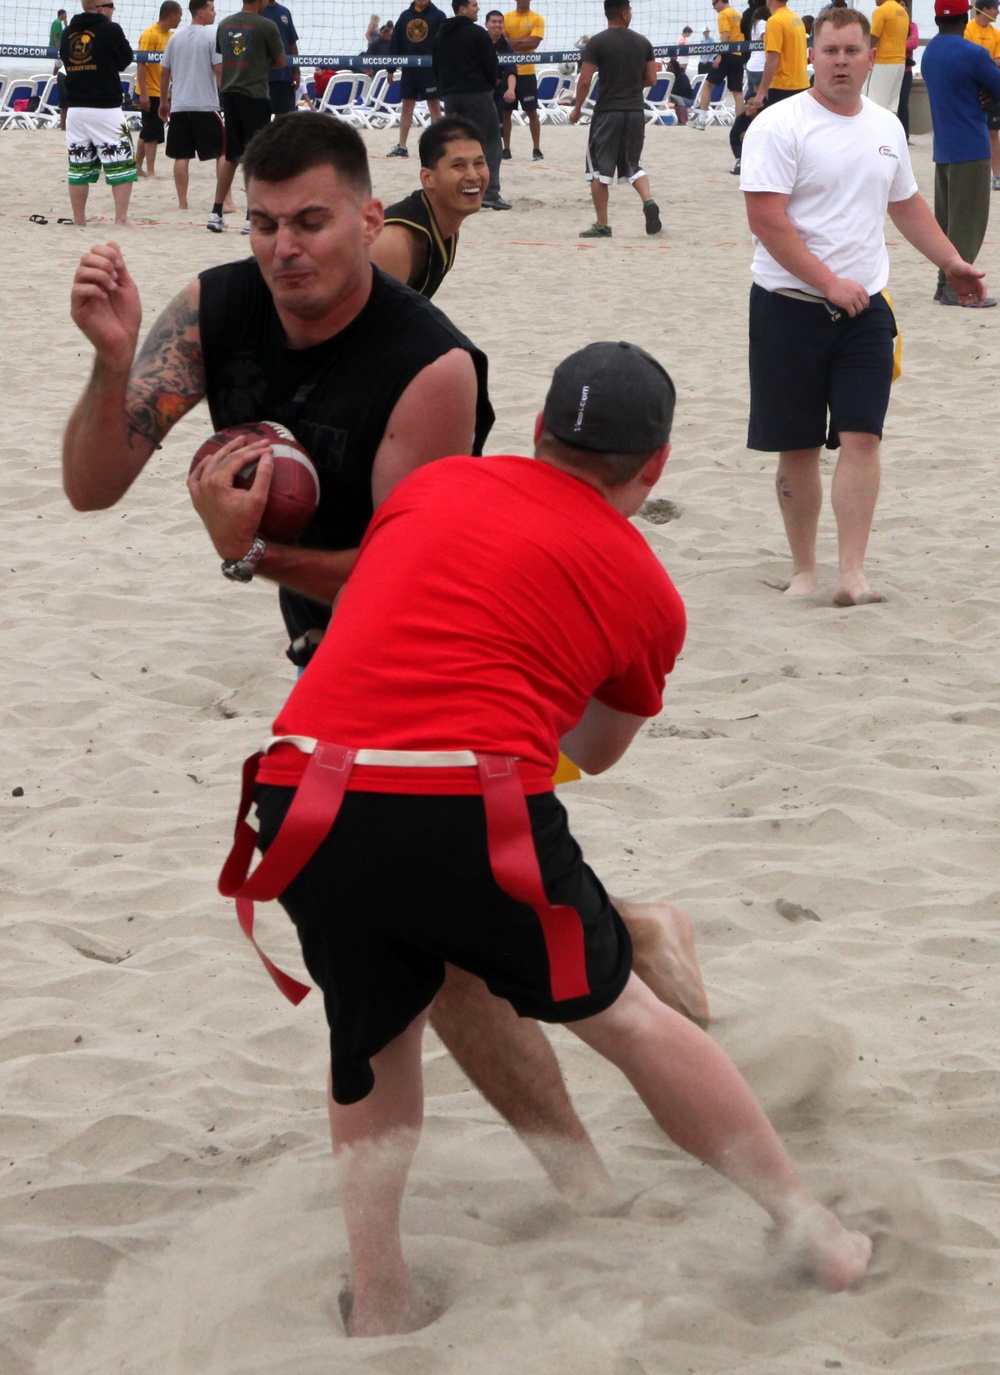 101 days of summer safety campaign help Marines, sailors prevent hazards during summer fun